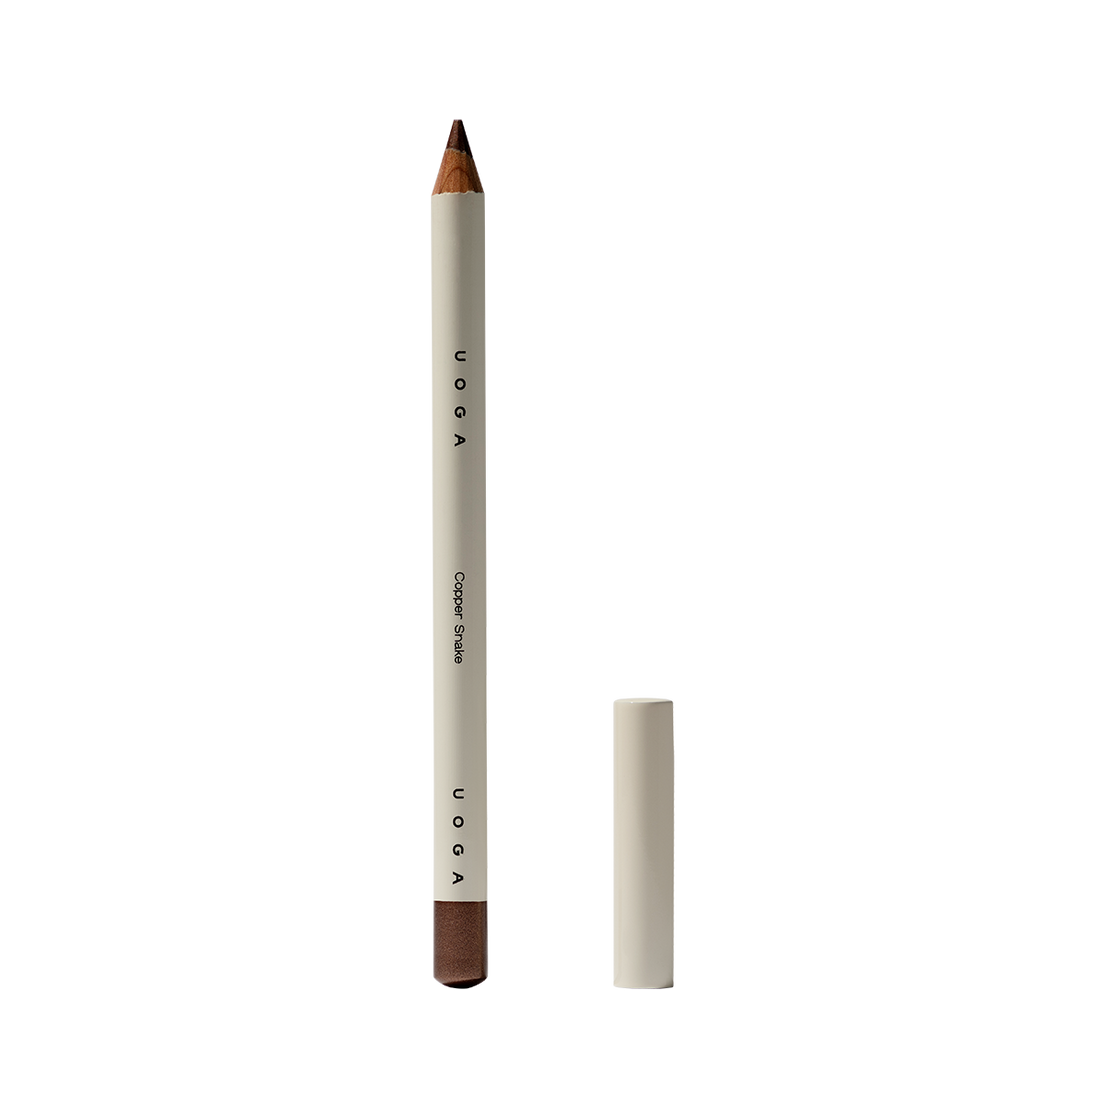 Uoga Uoga COPPER SNAKE Natural eye pencil in Copper Brown